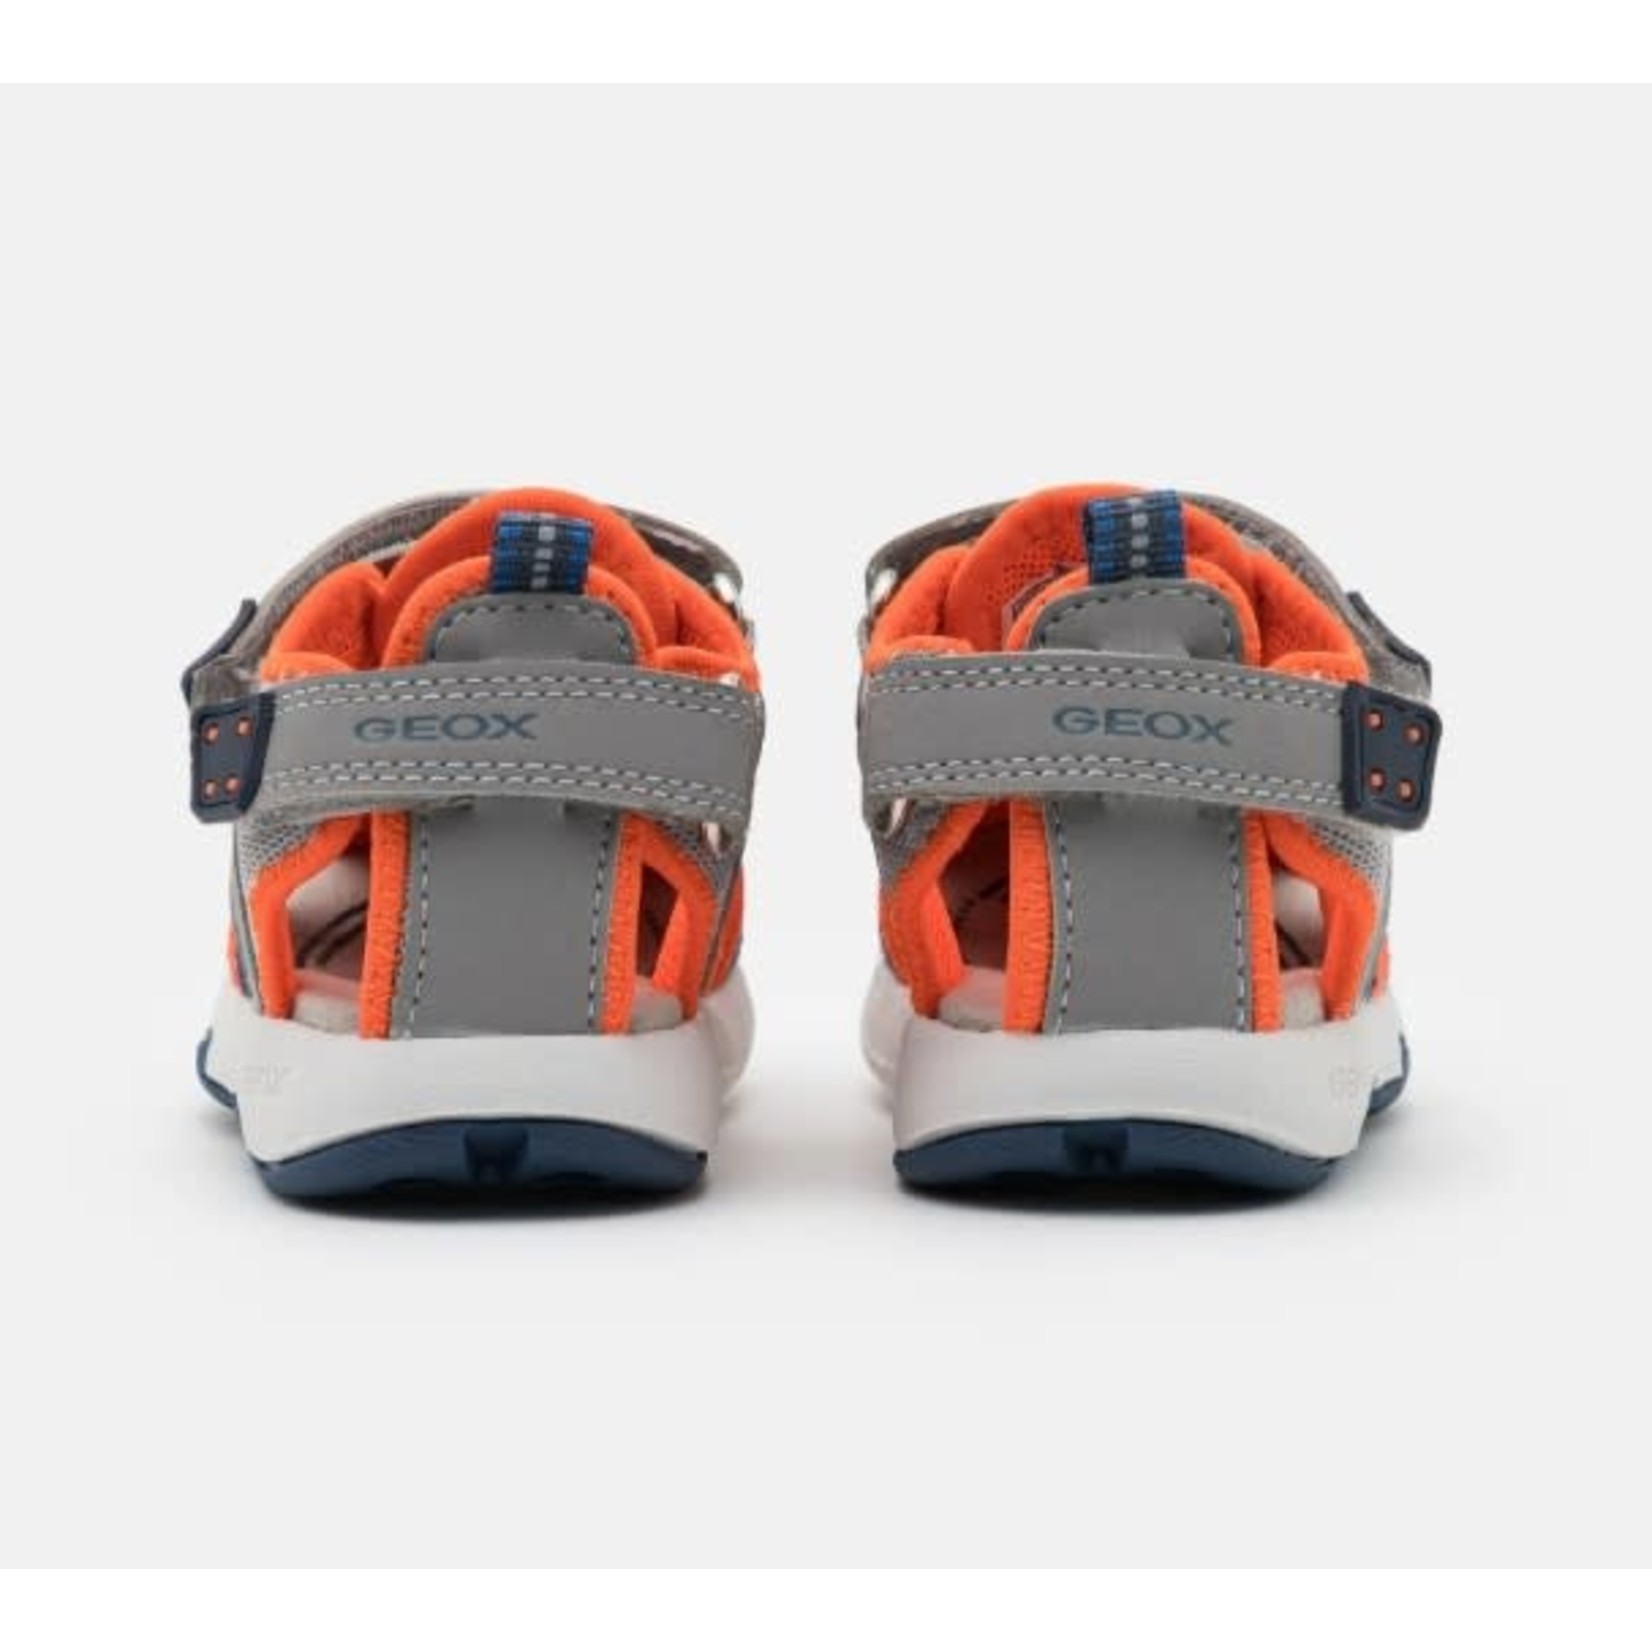 Geox GEOX - Closed toe sport sandals 'B.S Multy Grey/Fluo orange'